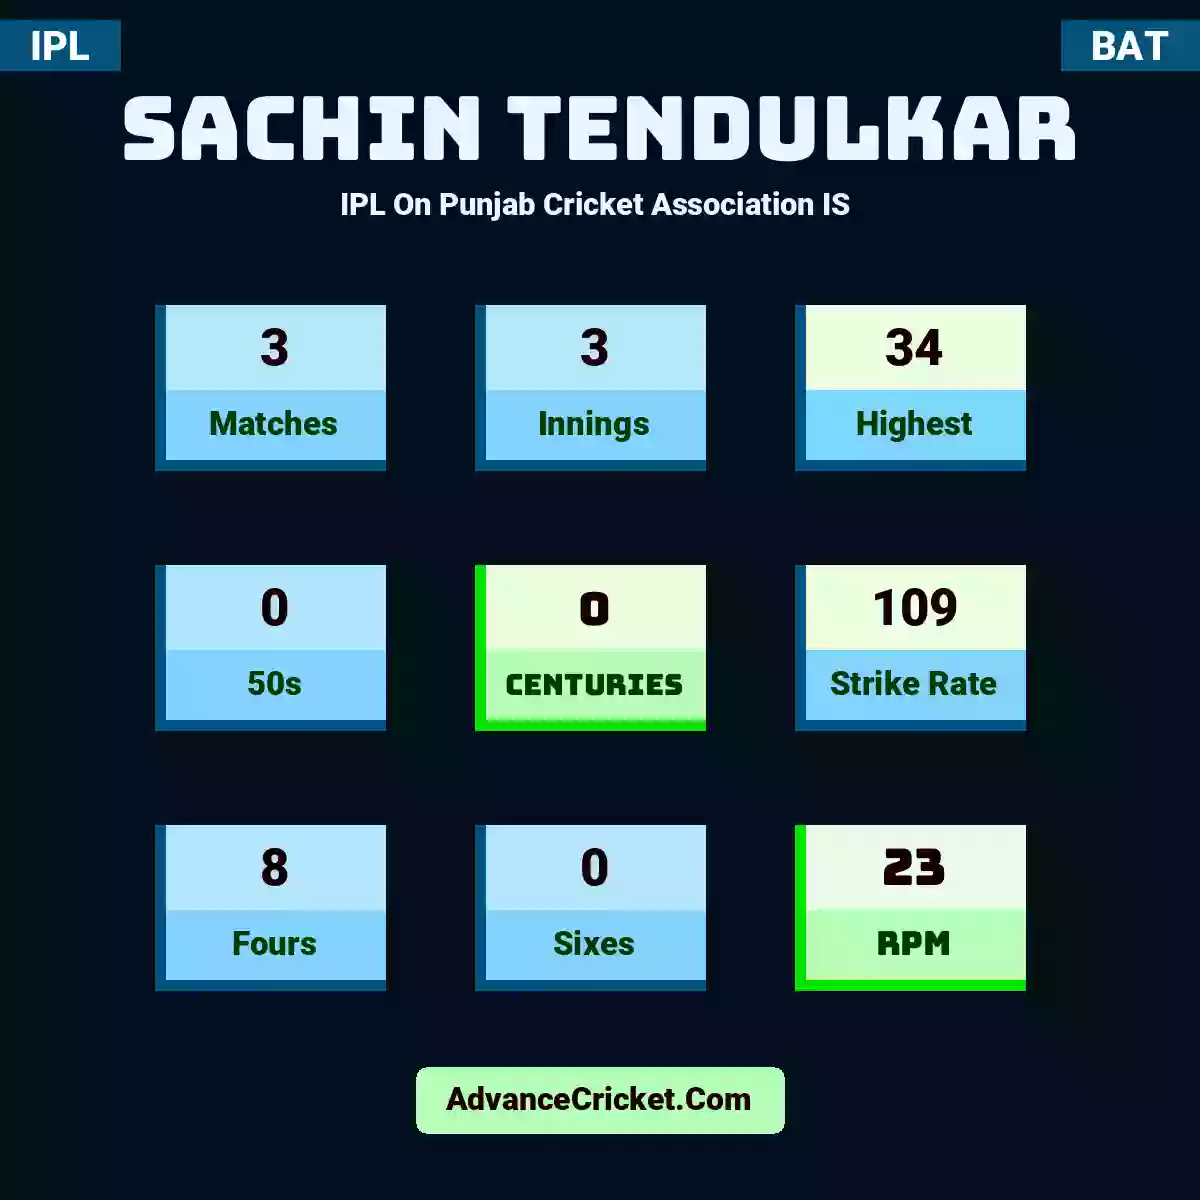 Sachin Tendulkar IPL  On Punjab Cricket Association IS , Sachin Tendulkar played 3 matches, scored 34 runs as highest, 0 half-centuries, and 0 centuries, with a strike rate of 109. S.Tendulkar hit 8 fours and 0 sixes, with an RPM of 23.